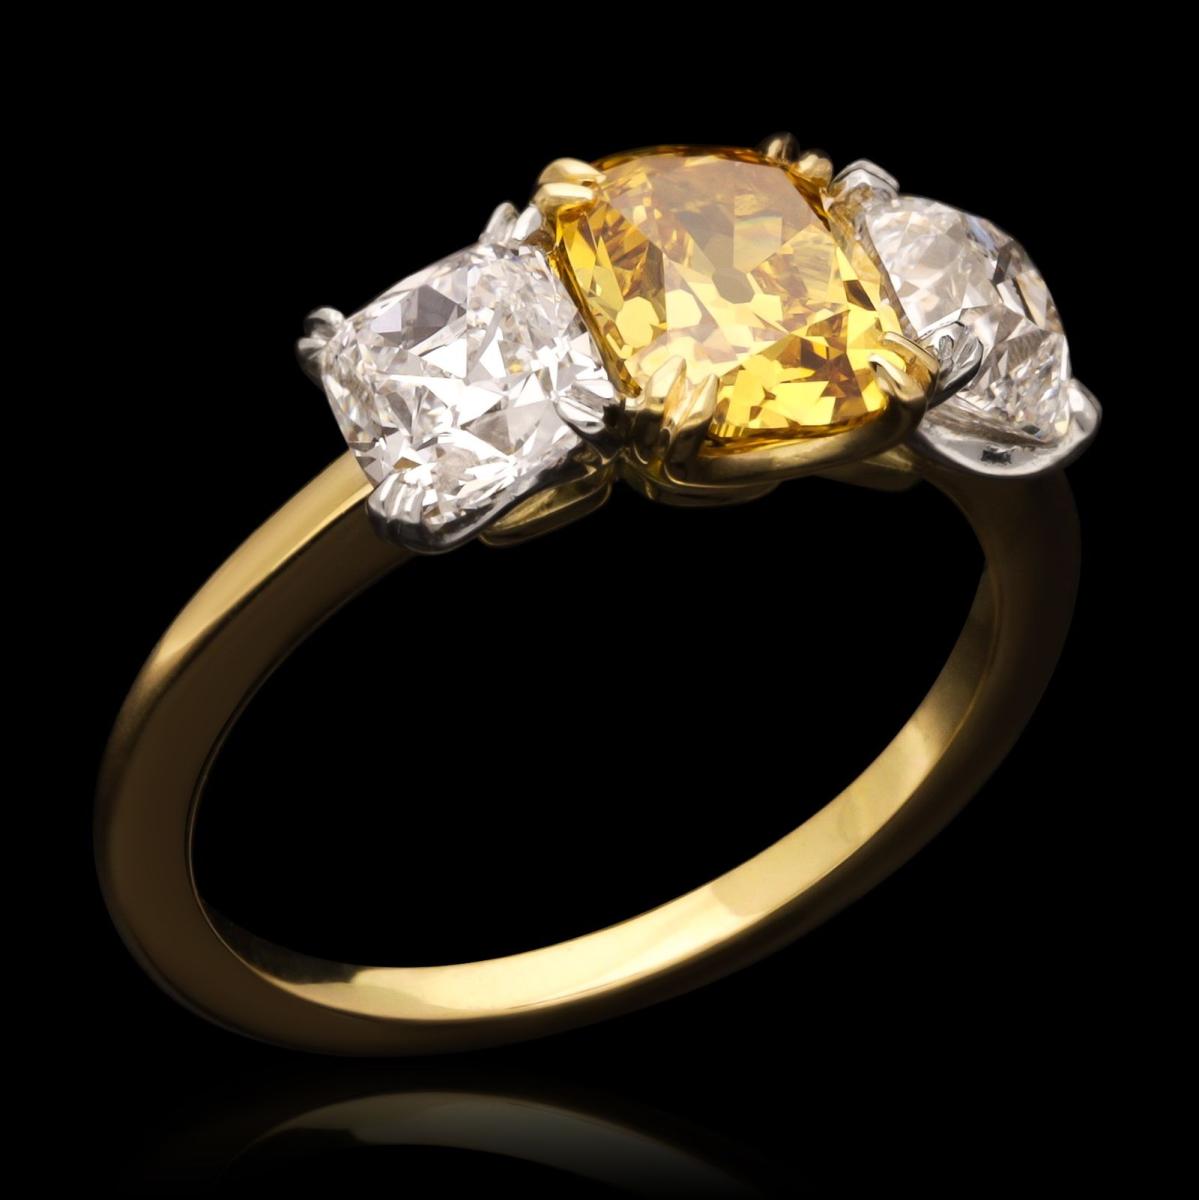 Hancocks 1.42ct Fancy Deep Orangey-Yellow Diamond Ring With Diamond Shoulders